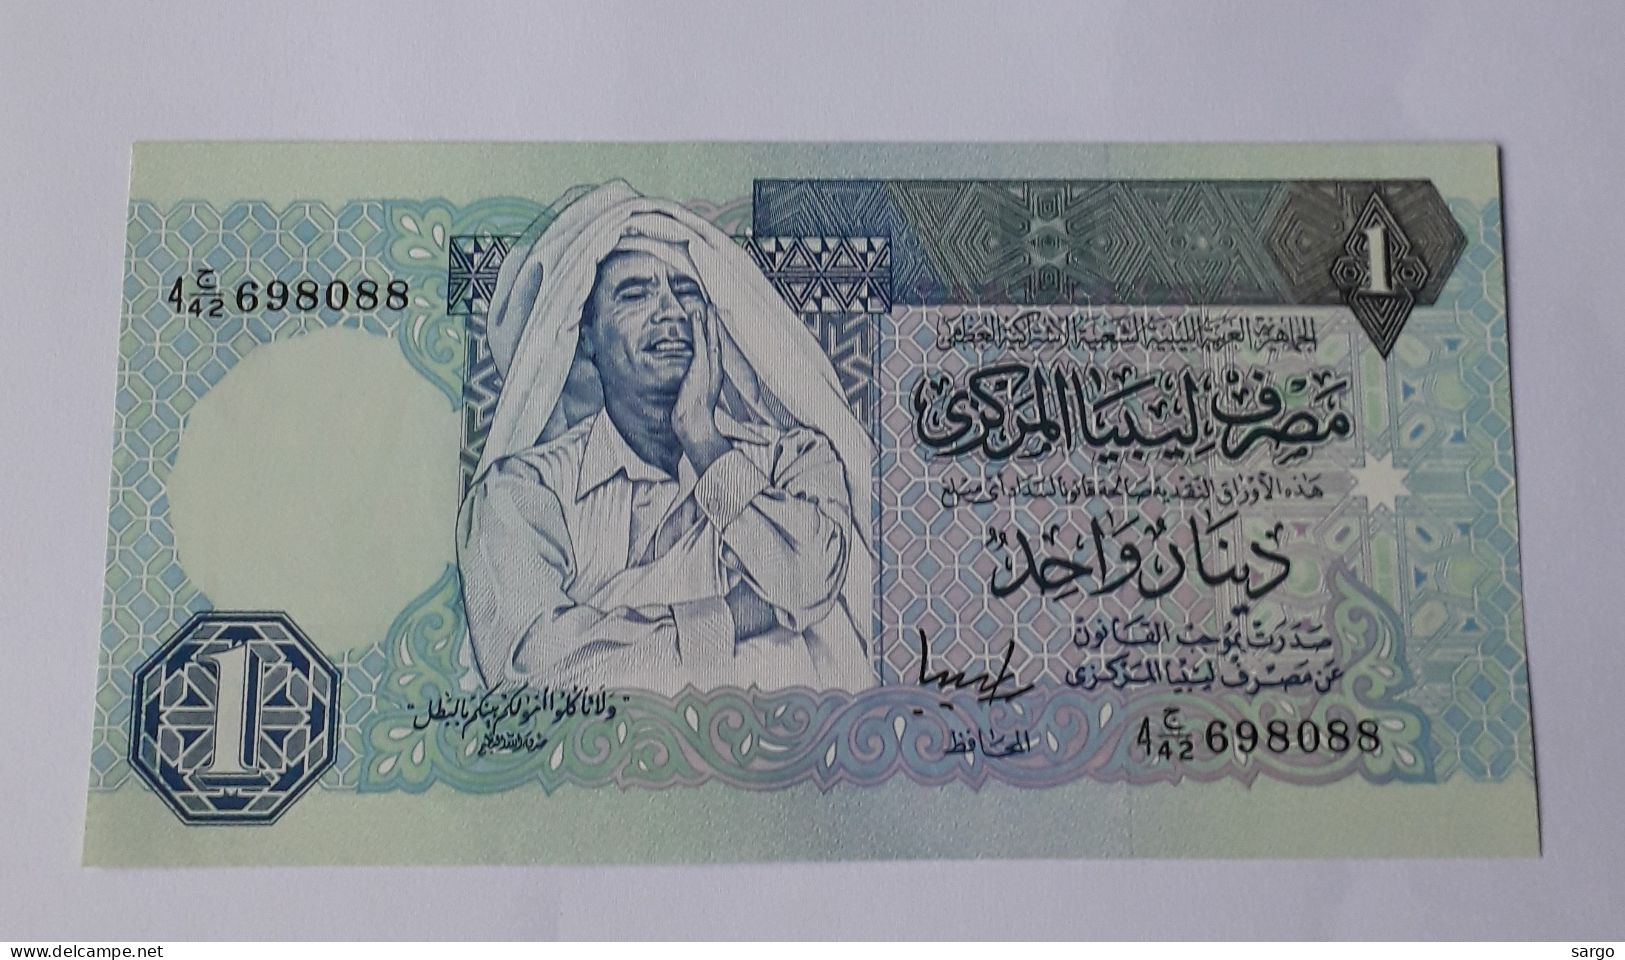 LIBYA - 1 DINAR - 1991 -  P 59b  - UNC - BANKNOTES - PAPER MONEY - CARTAMONETA - - Libia